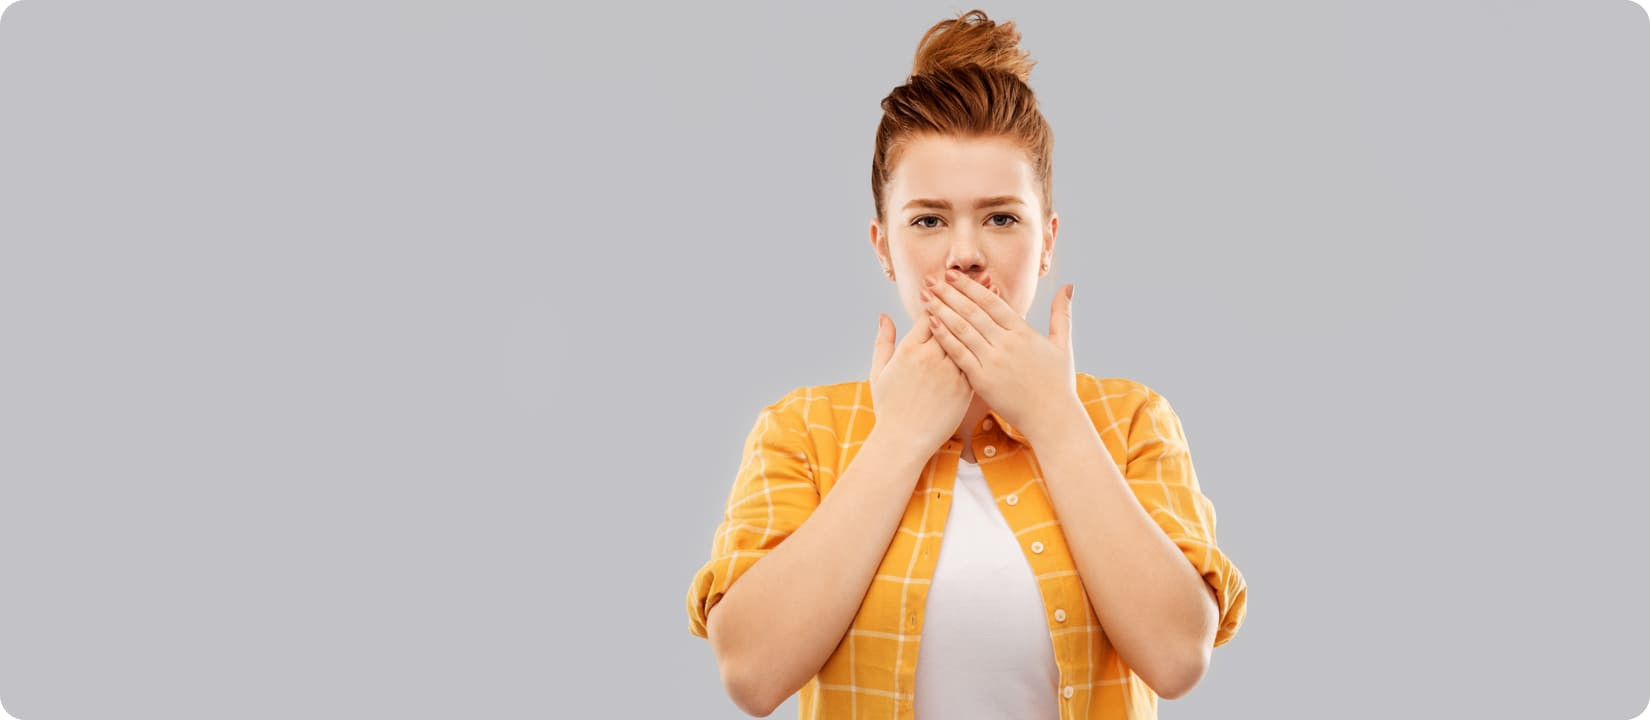 Неприятный запах изо рта ребенка. Причины и лечение